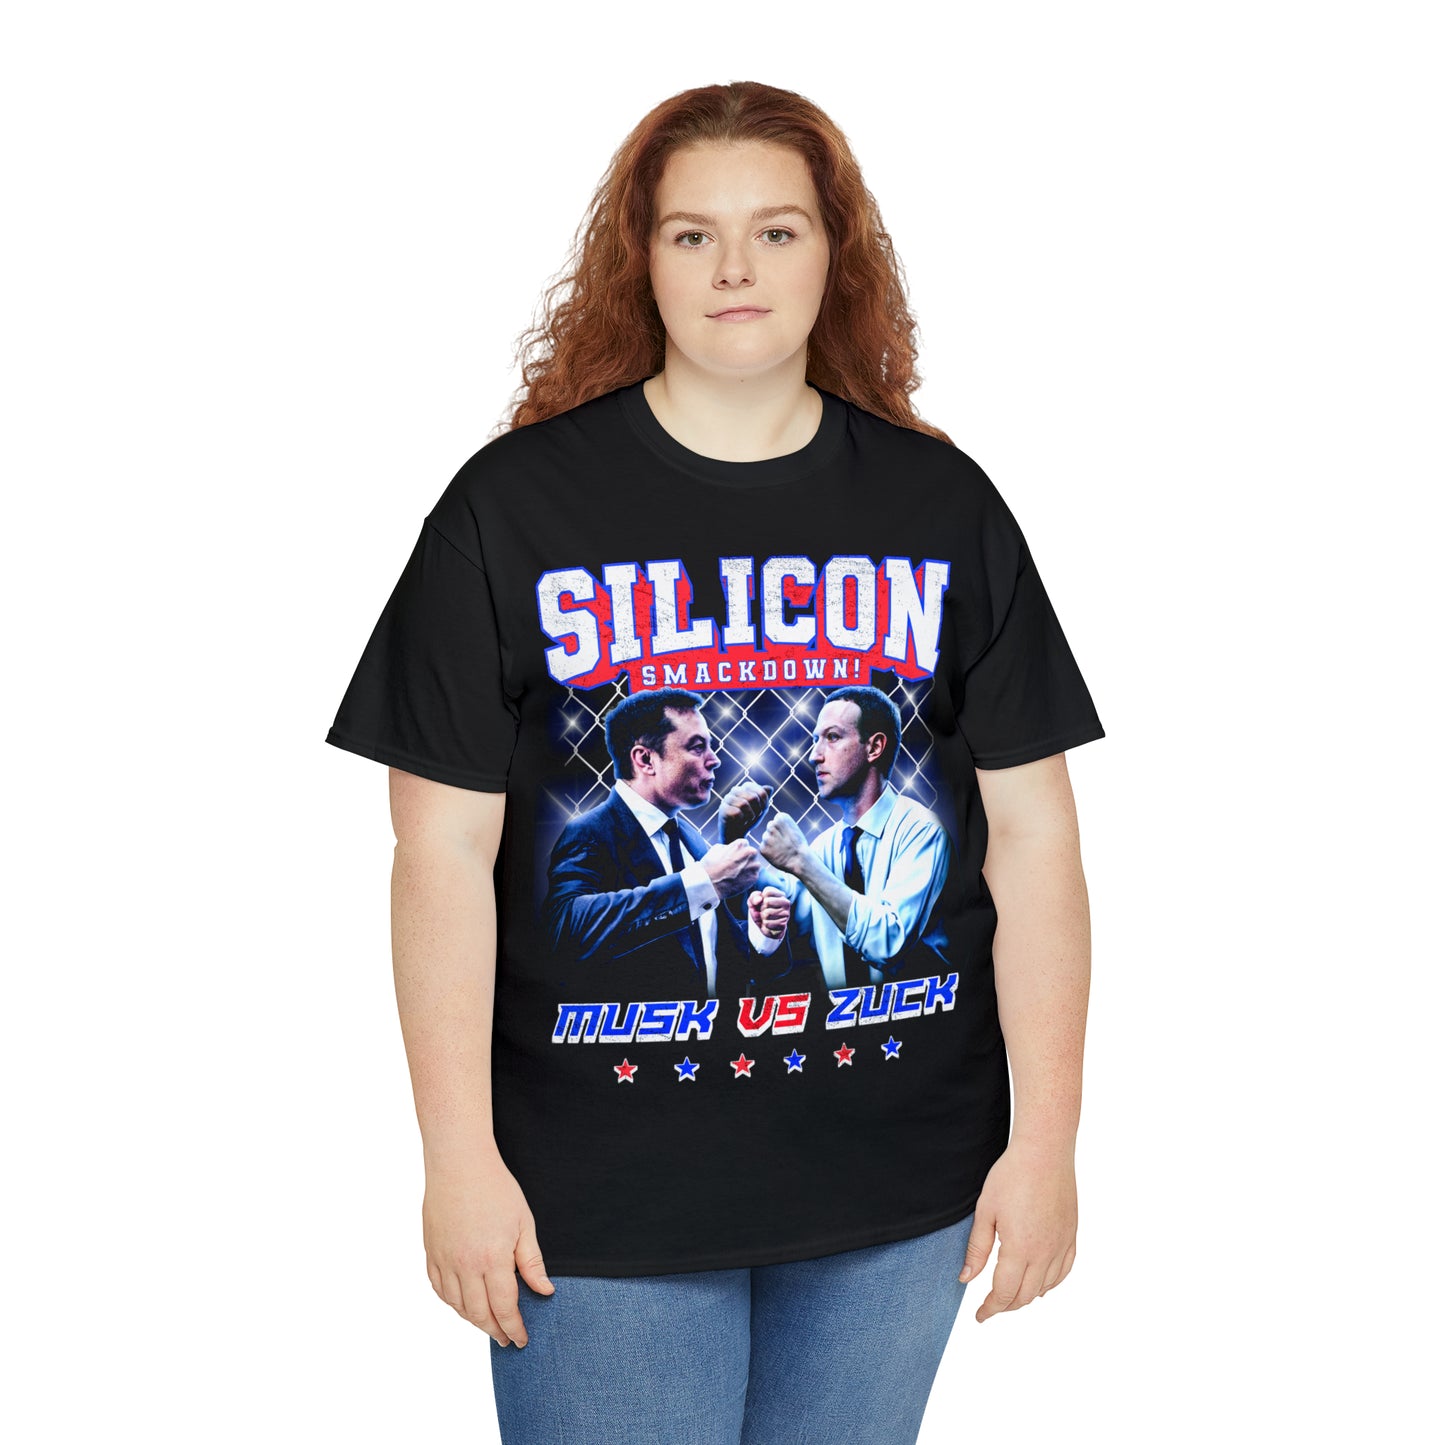 Musk vs Zuck "Silicon Smashdown" T-Shirt!